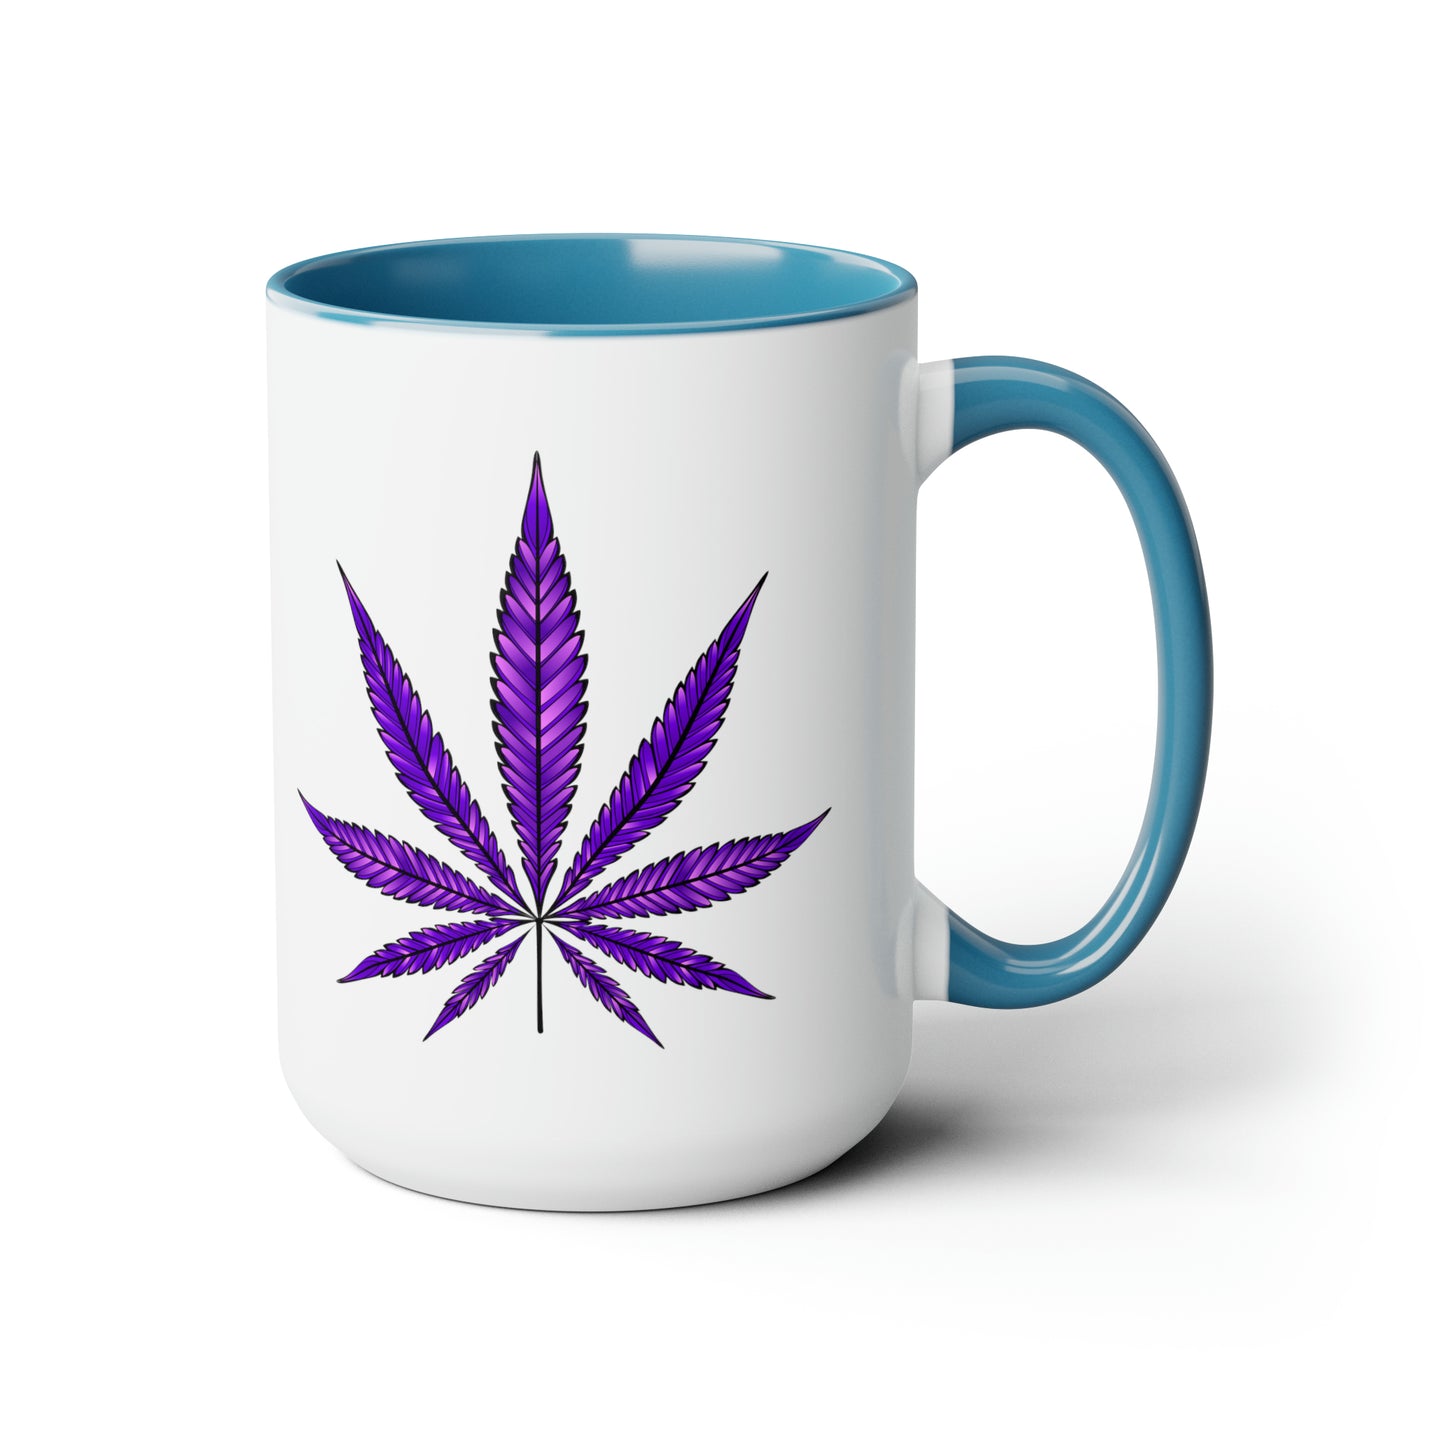 Purple Haze Marijuana Coffee Mug with a blue interior and handle, featuring a Purple Haze Marijuana leaf design on the side.